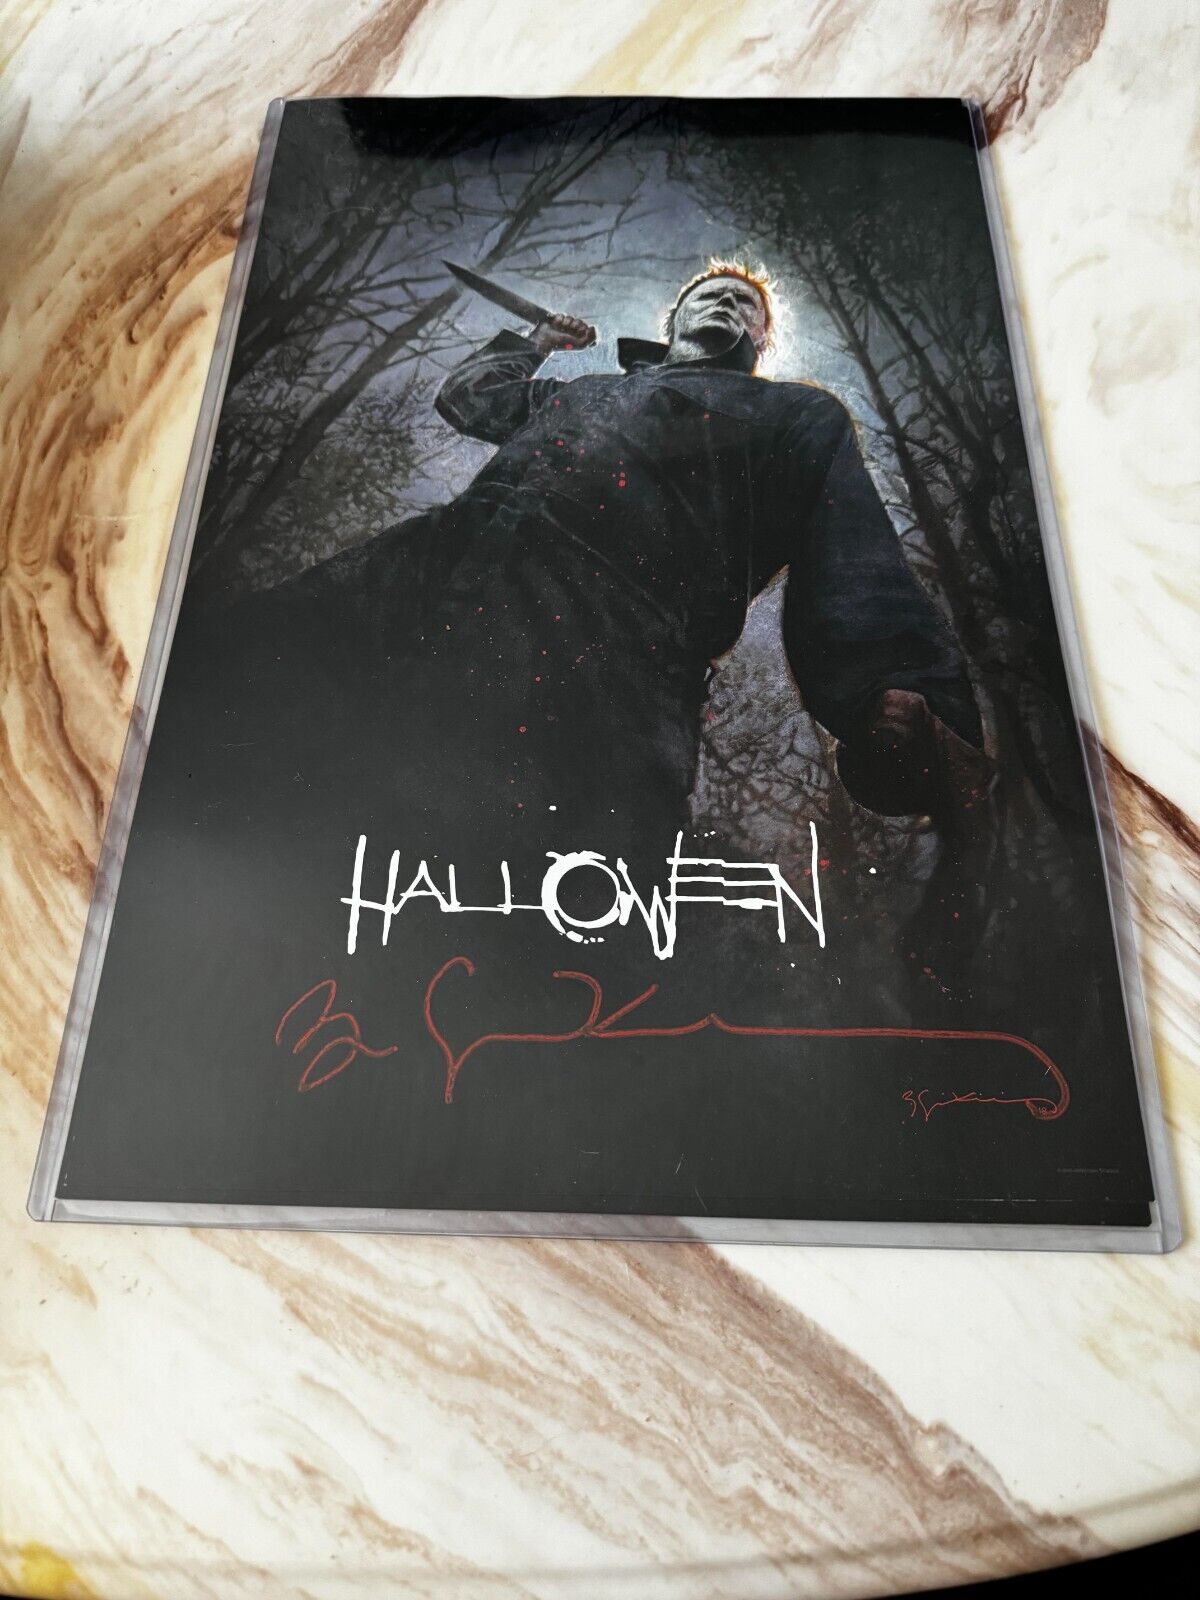 Bill Sienkiewicz Signed (Embellished Halloween) Art Print Poster Promo 2018